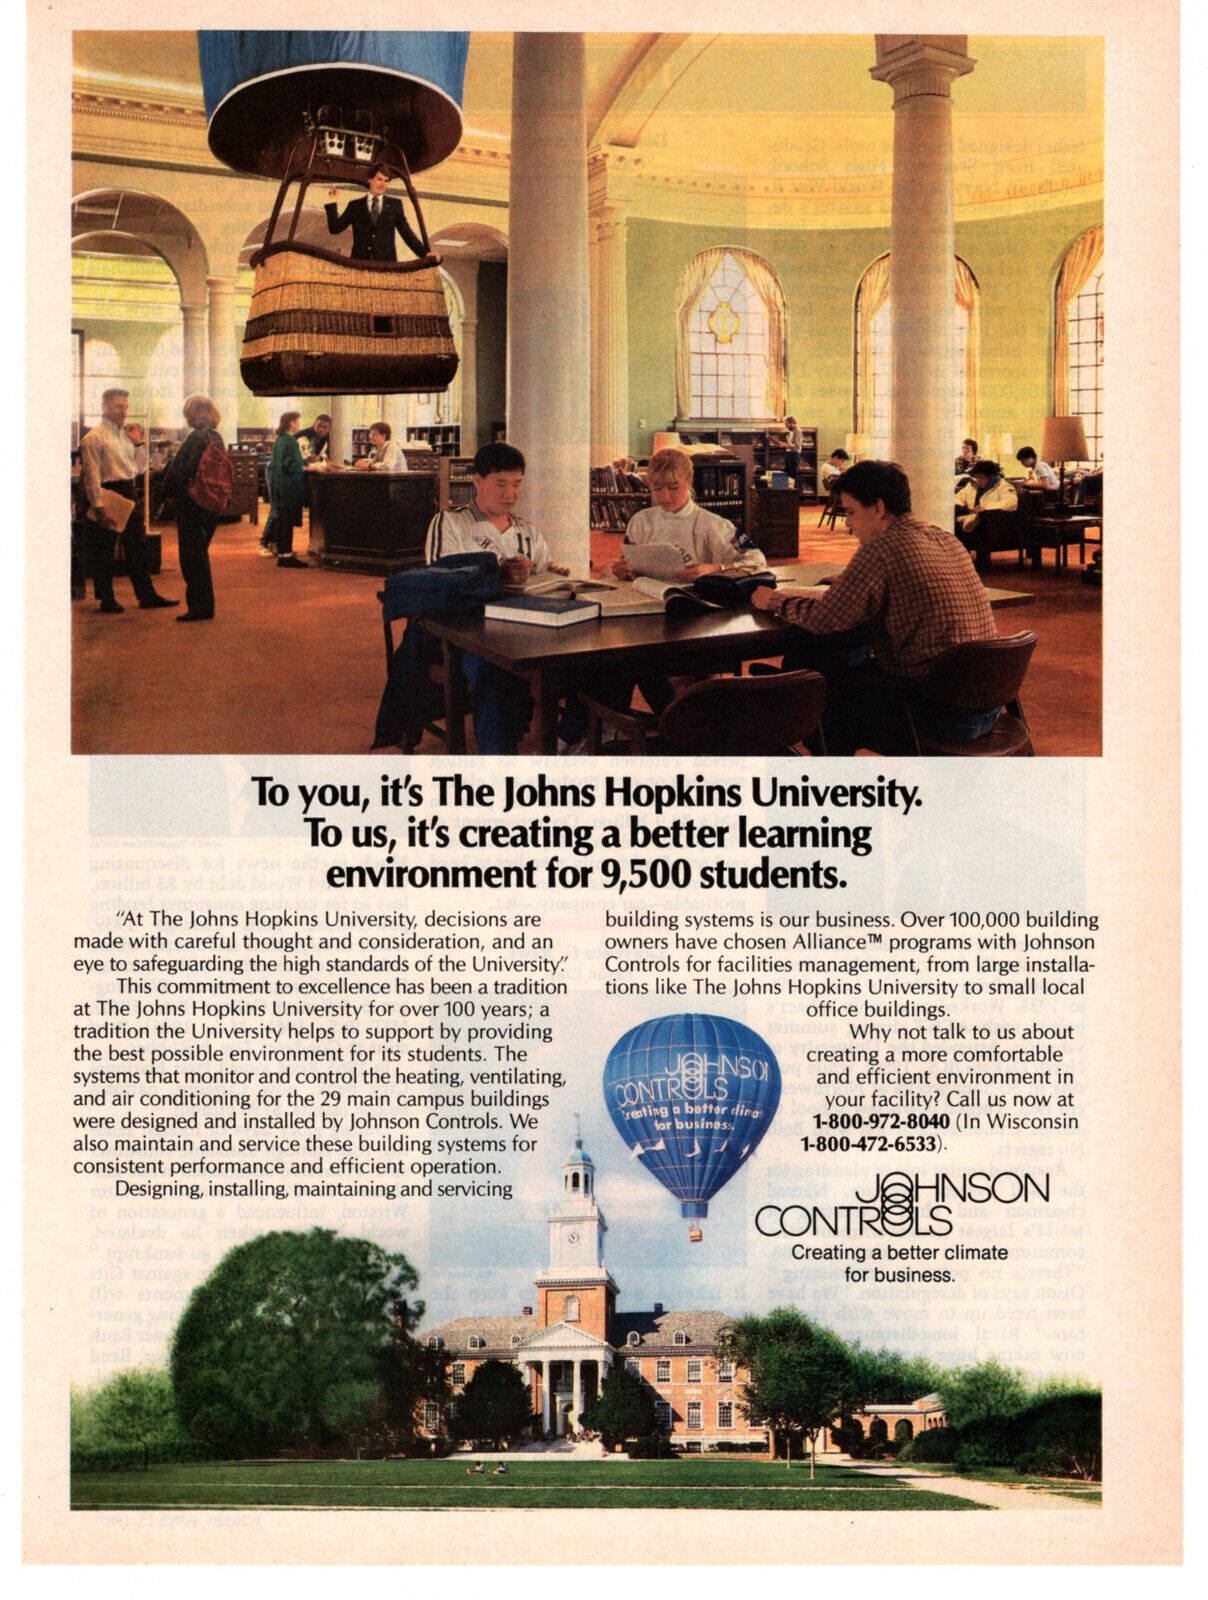 JOHNSON CONTROLS John Hopkins University 1987 Vintage Print Ad Original Man Cave